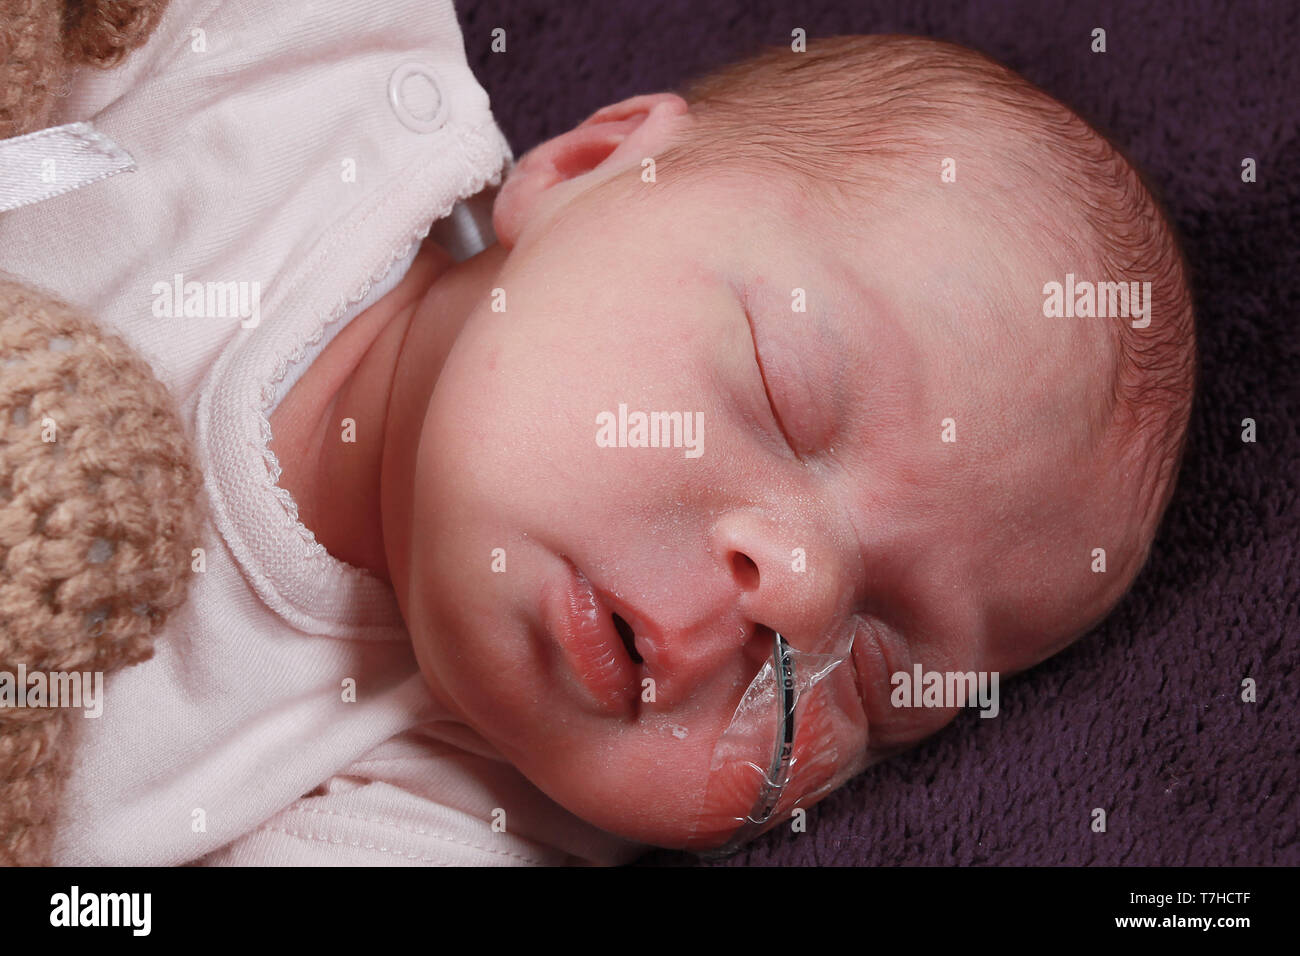 premature baby girl with feeding tube, NG tube Stock Photo